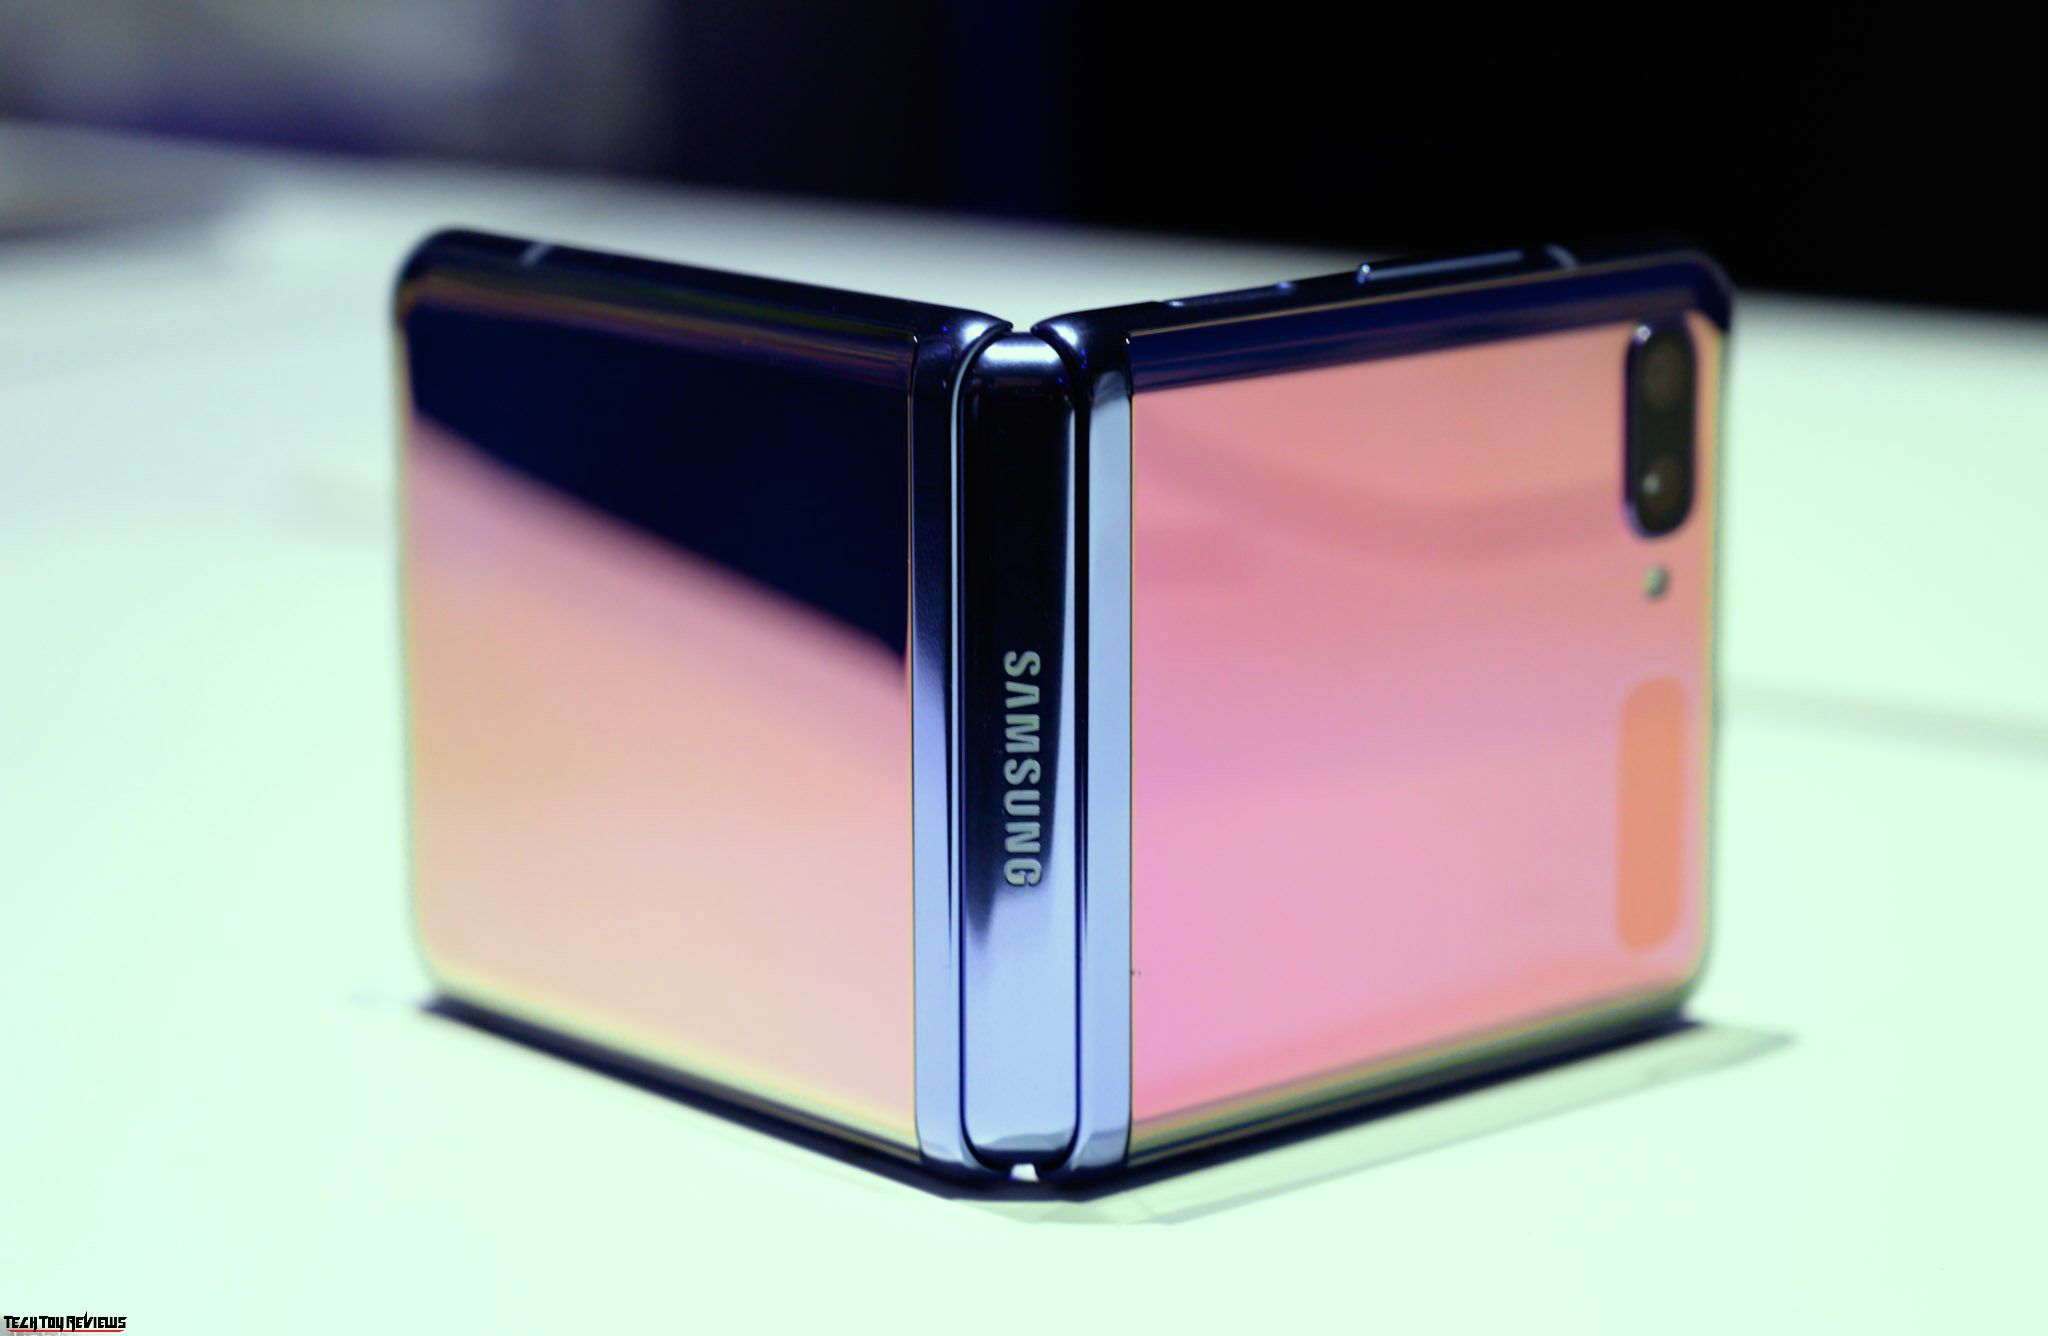 Samsung Z Flip Phone Dual-SIM Unlocked model now available via BH Photo